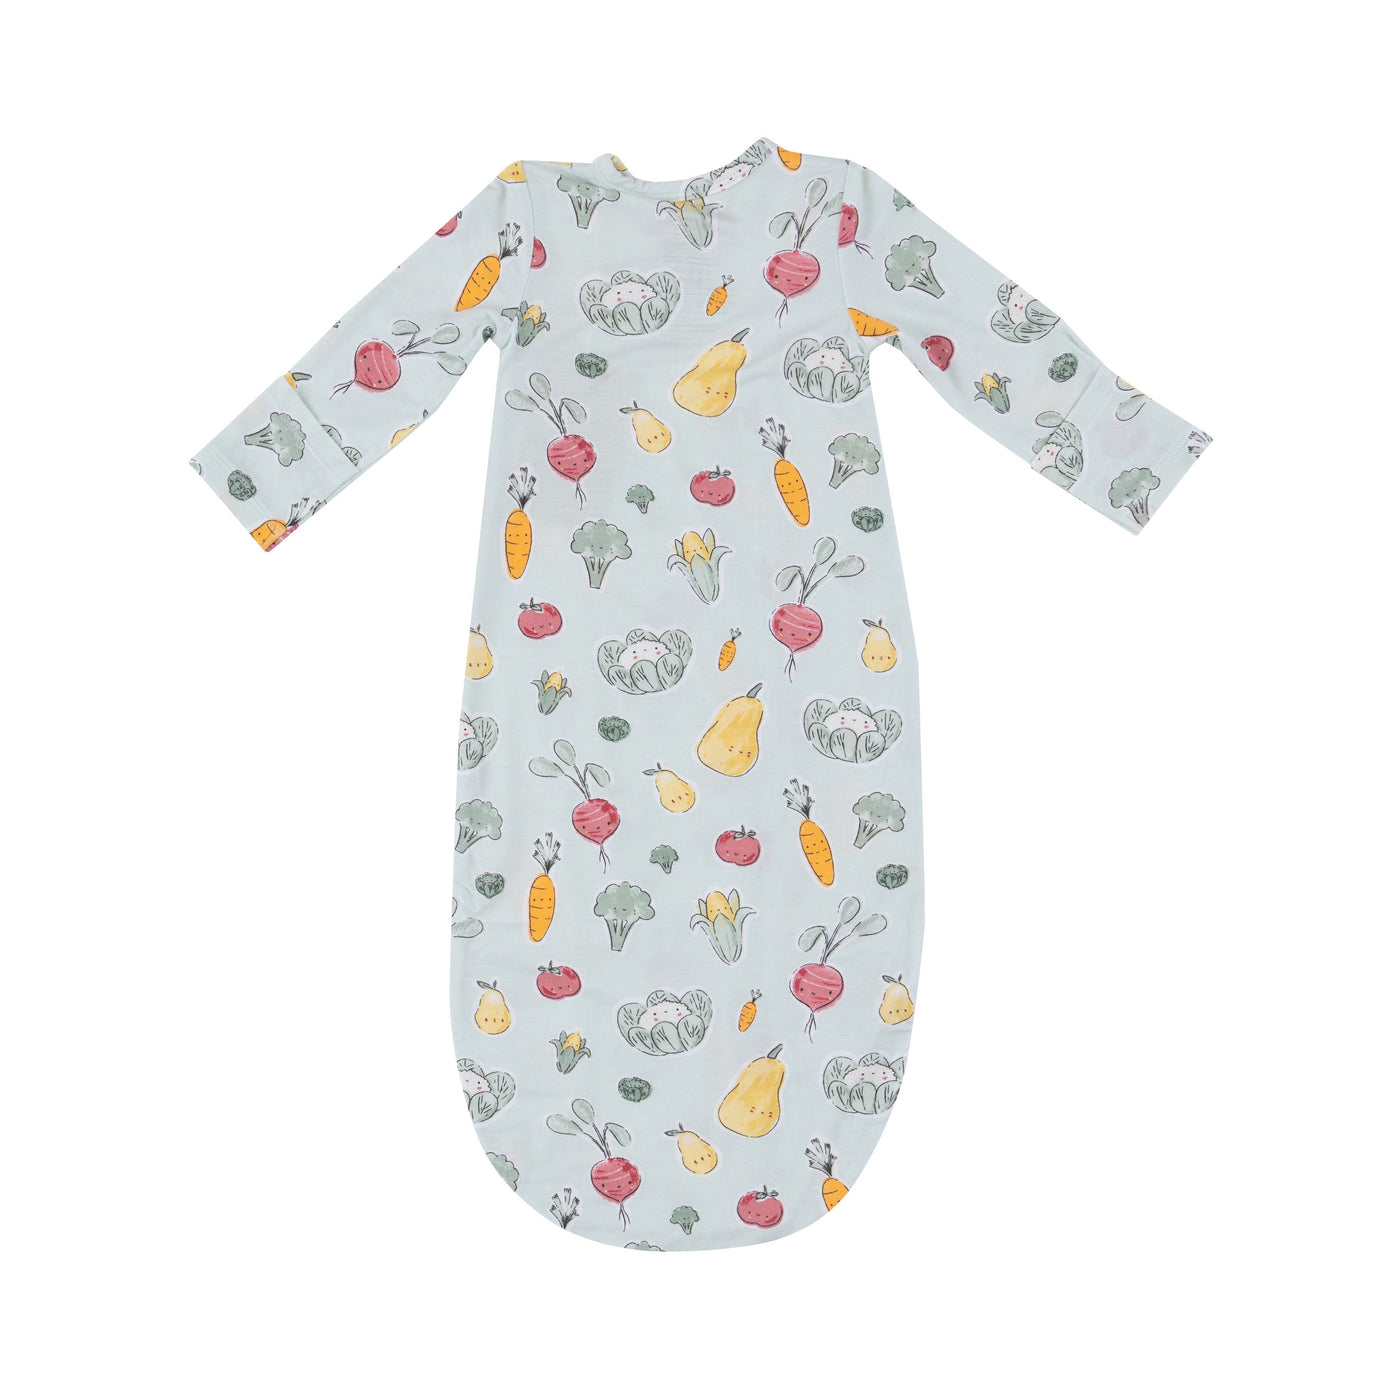 Bundle Gown - Watercolor Baby Veggies - Angel Dear